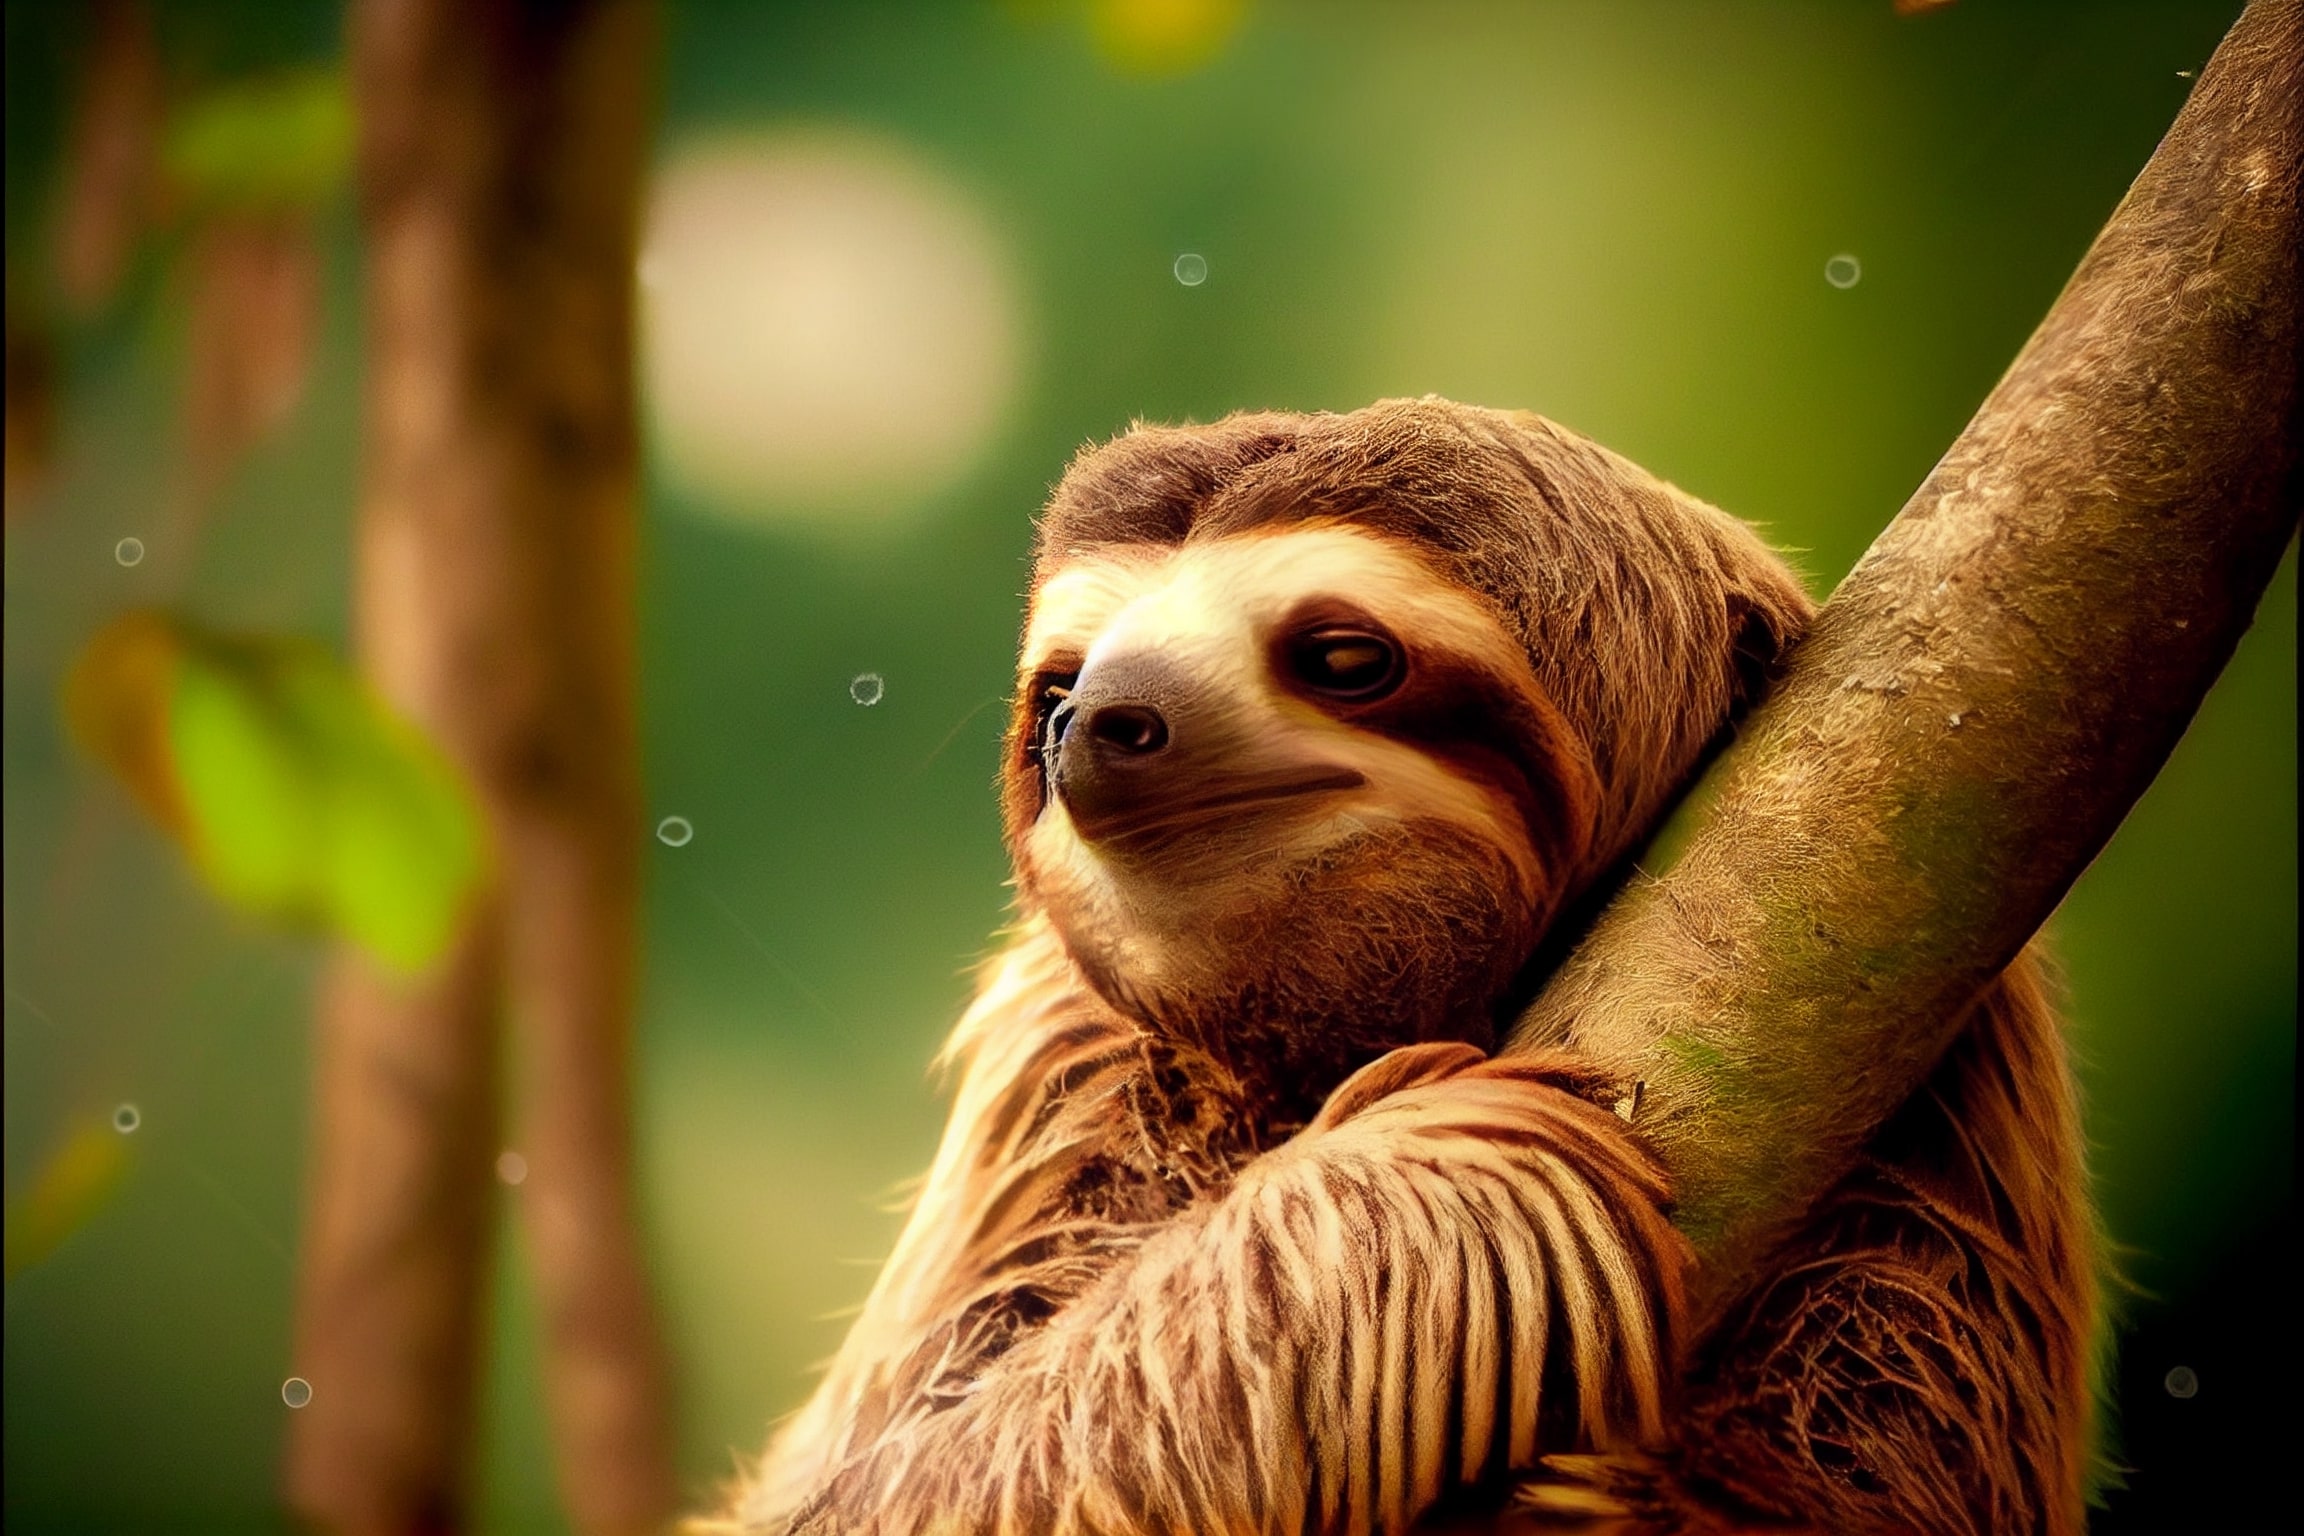 digitaldoodles realistic photography a sloth in the tree branch a8dda94e 1e58 4643 a1da 9ffe4d0b43b1 283